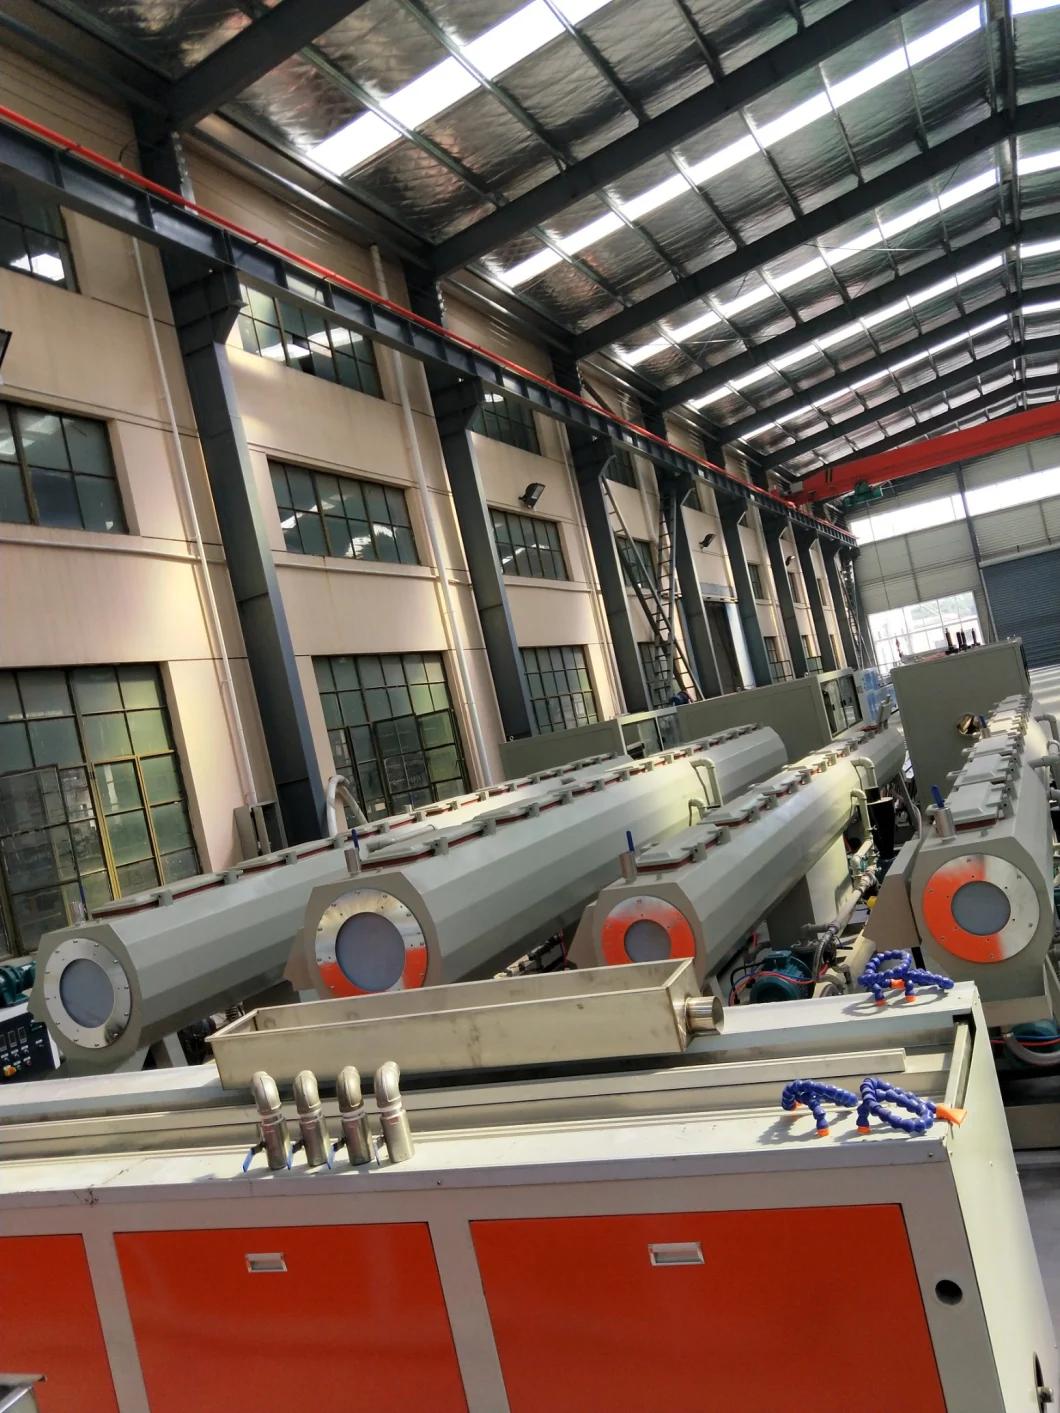 Vacuum Calibration Tank for PVC Pipe Production Line